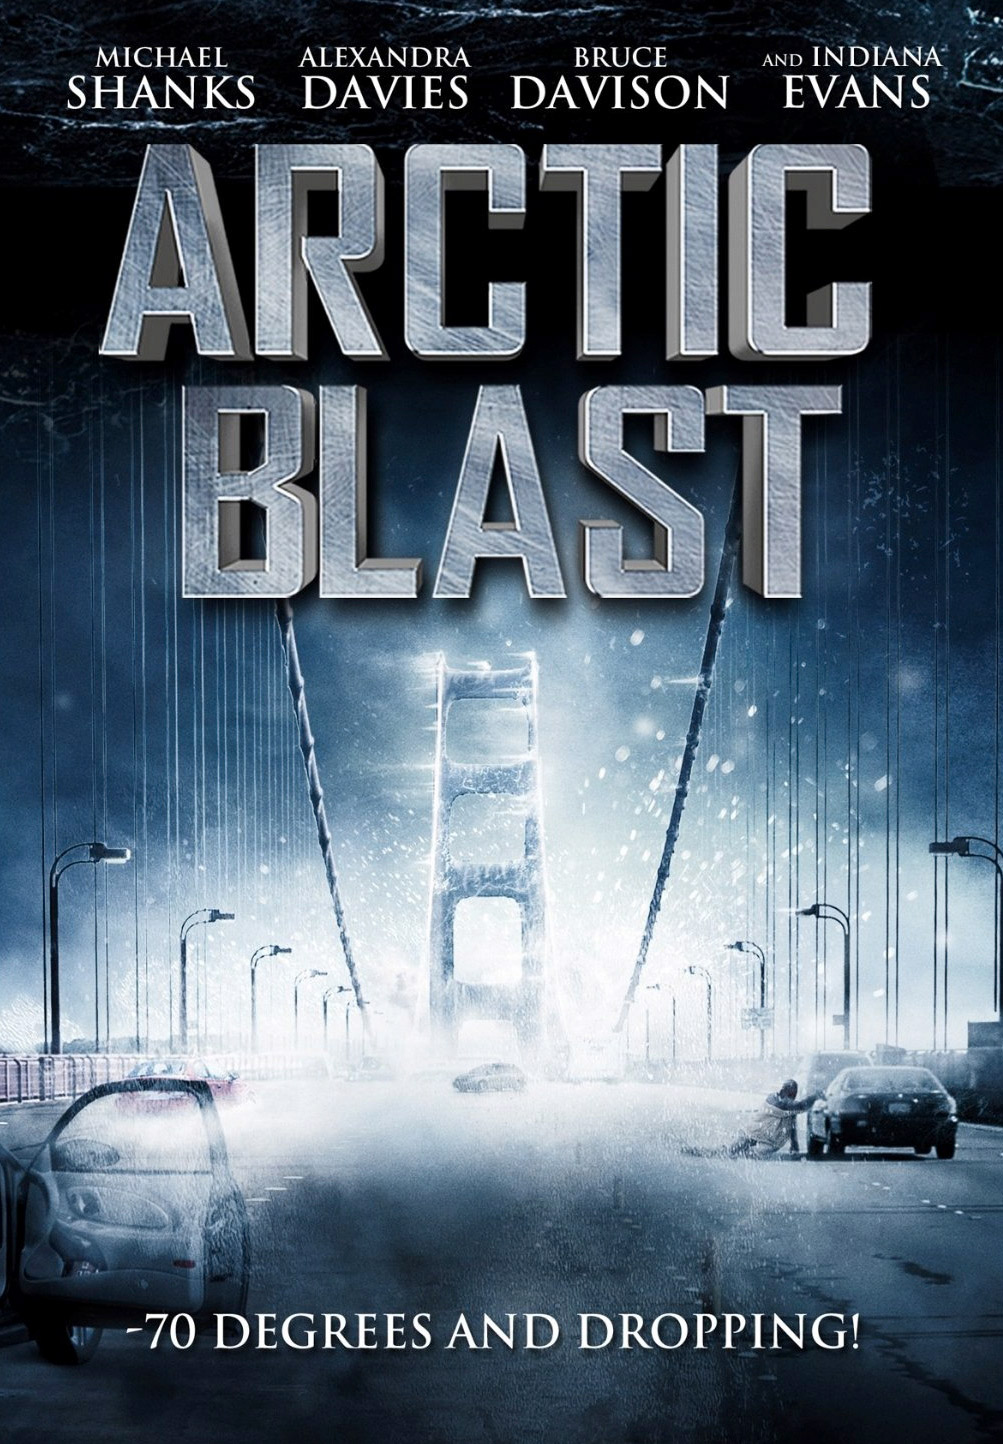 Ice Twister 2 – Arctic Blast